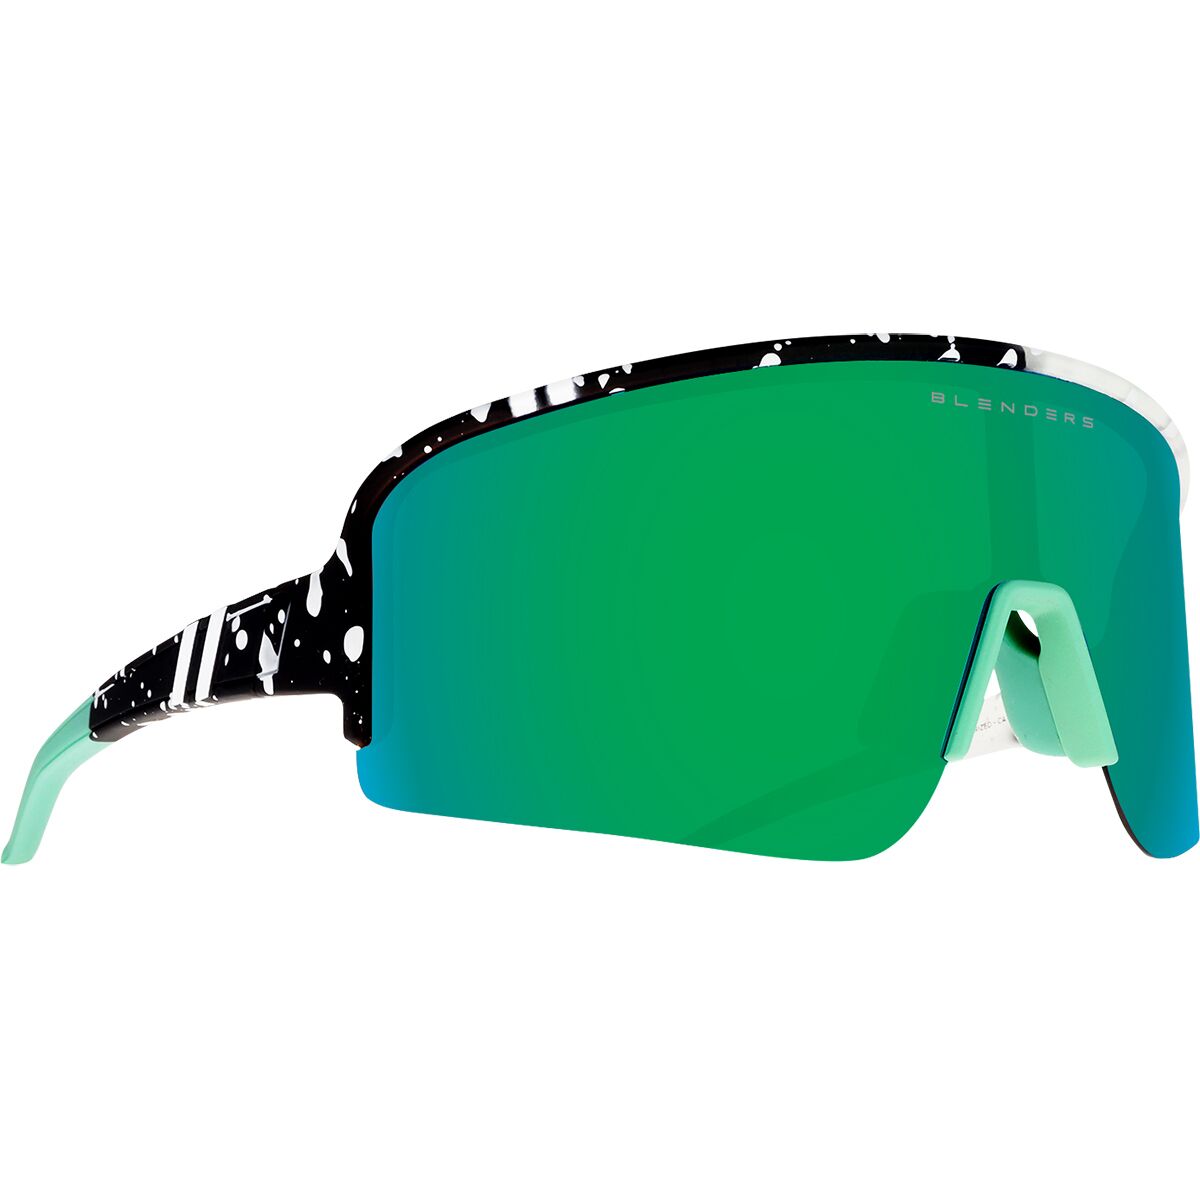 Blenders Eyewear Risk Taker Eclipse X2 Polarized Sunglasses